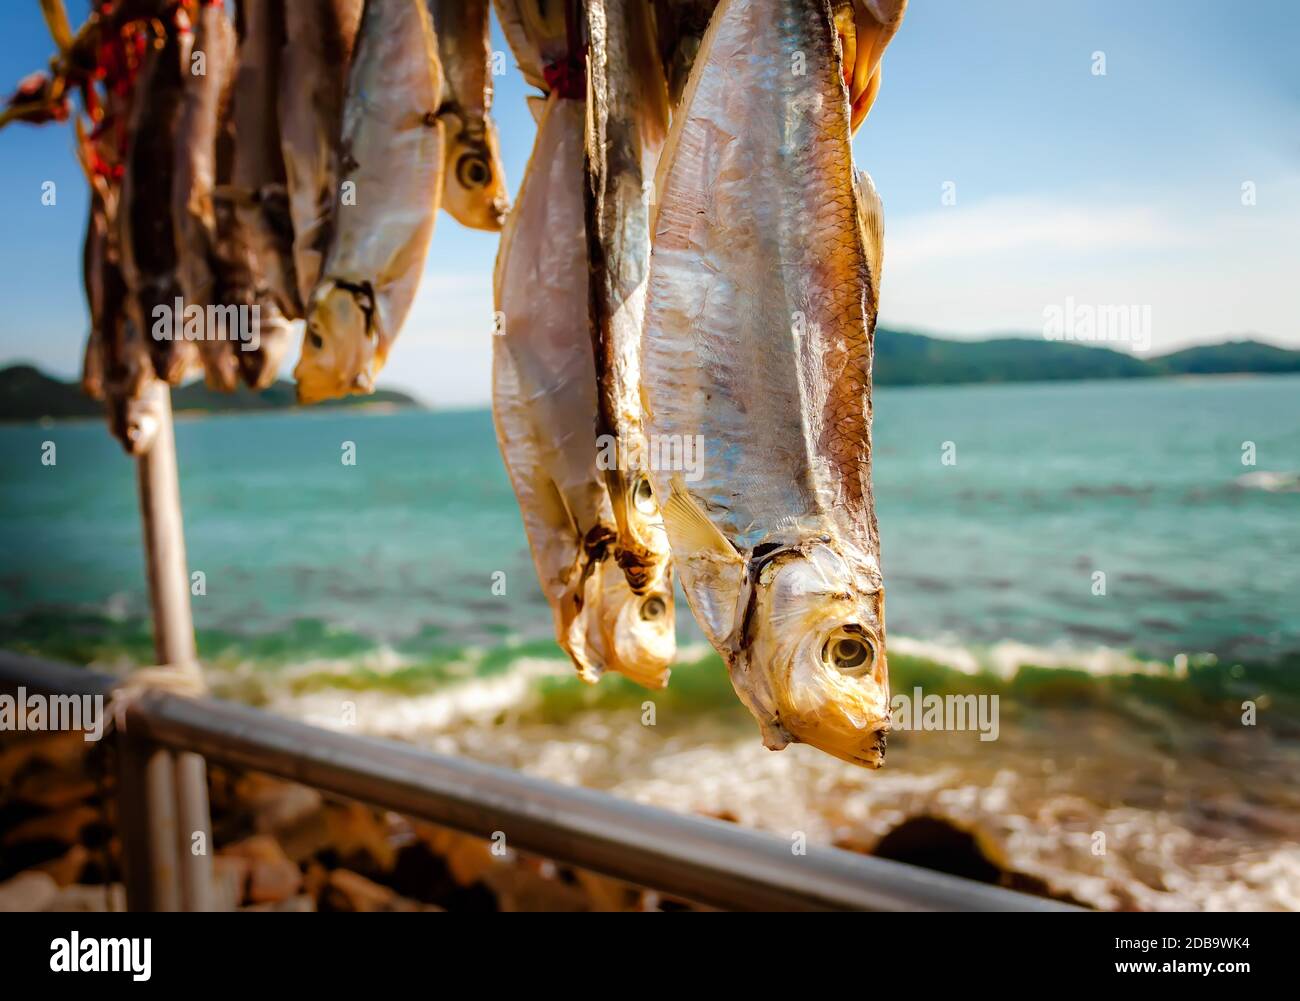 Dried Cured Fish under Hot Sun at Fishing Village in Peng Chau Island in Hong Kong Stock Photo